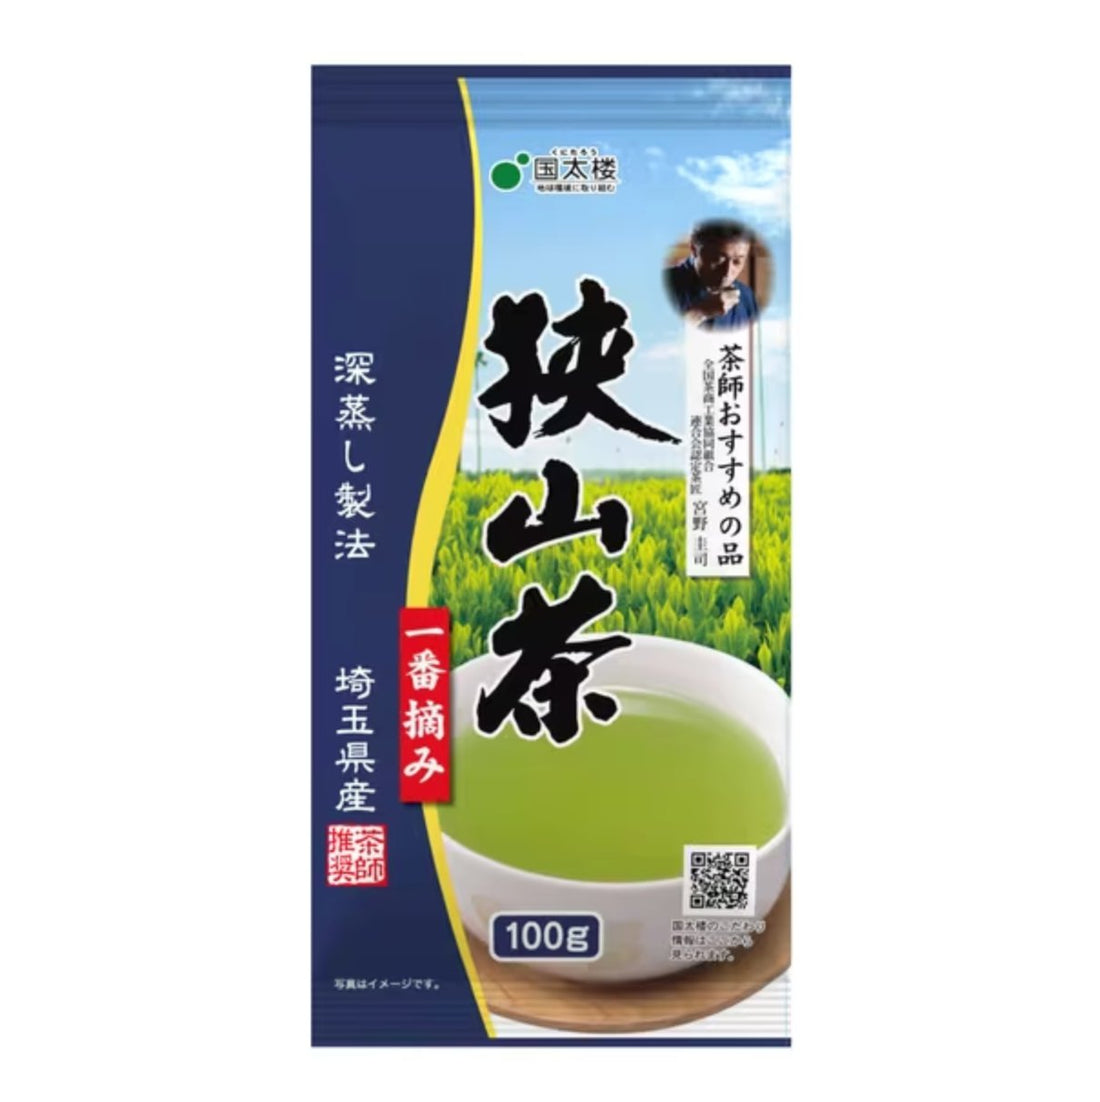 Kunitaro Saitama first picked Sayama tea 100g - NihonMura